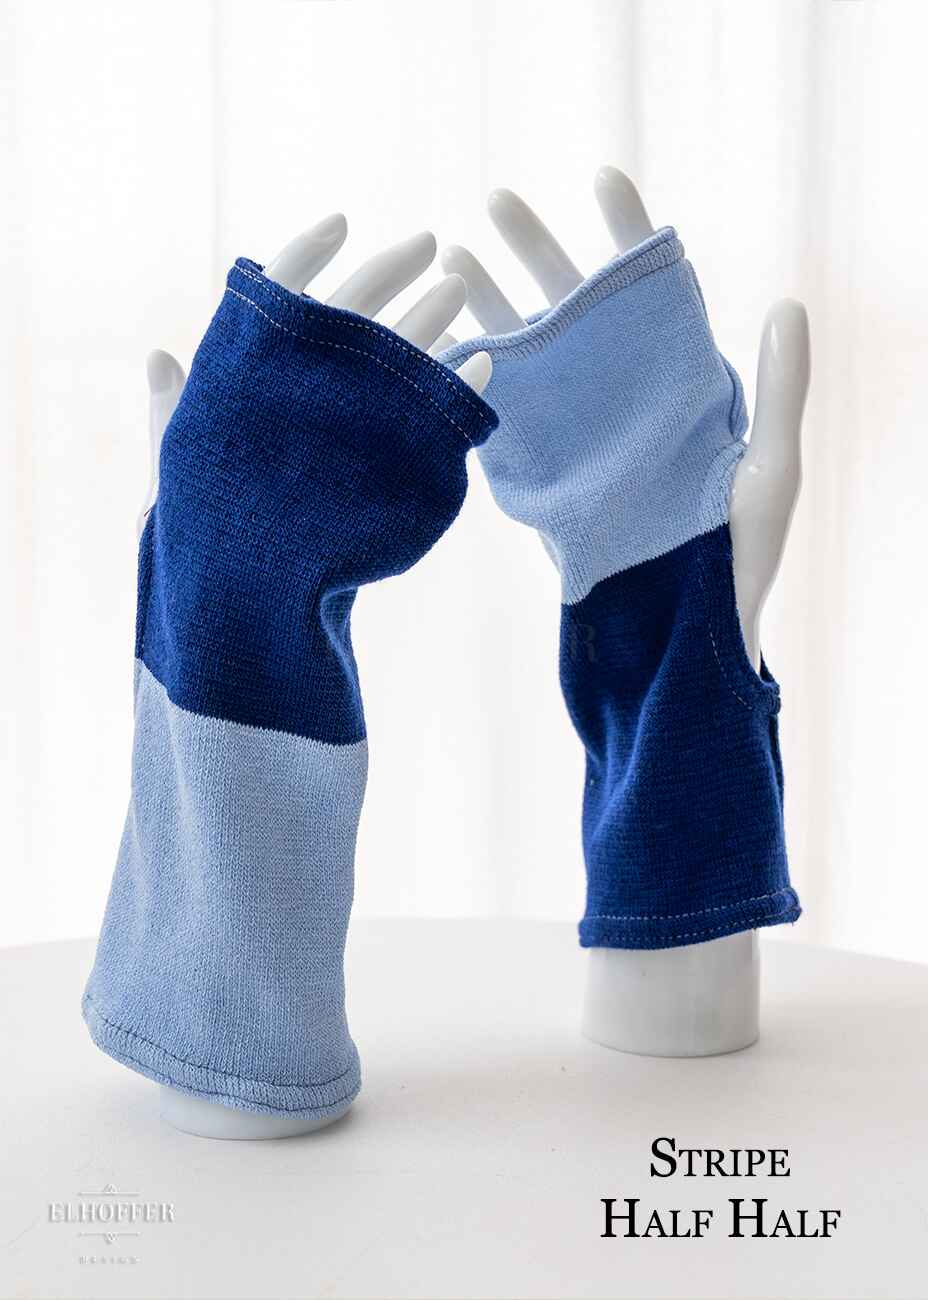 Handy Dandy Fingerless Gloves